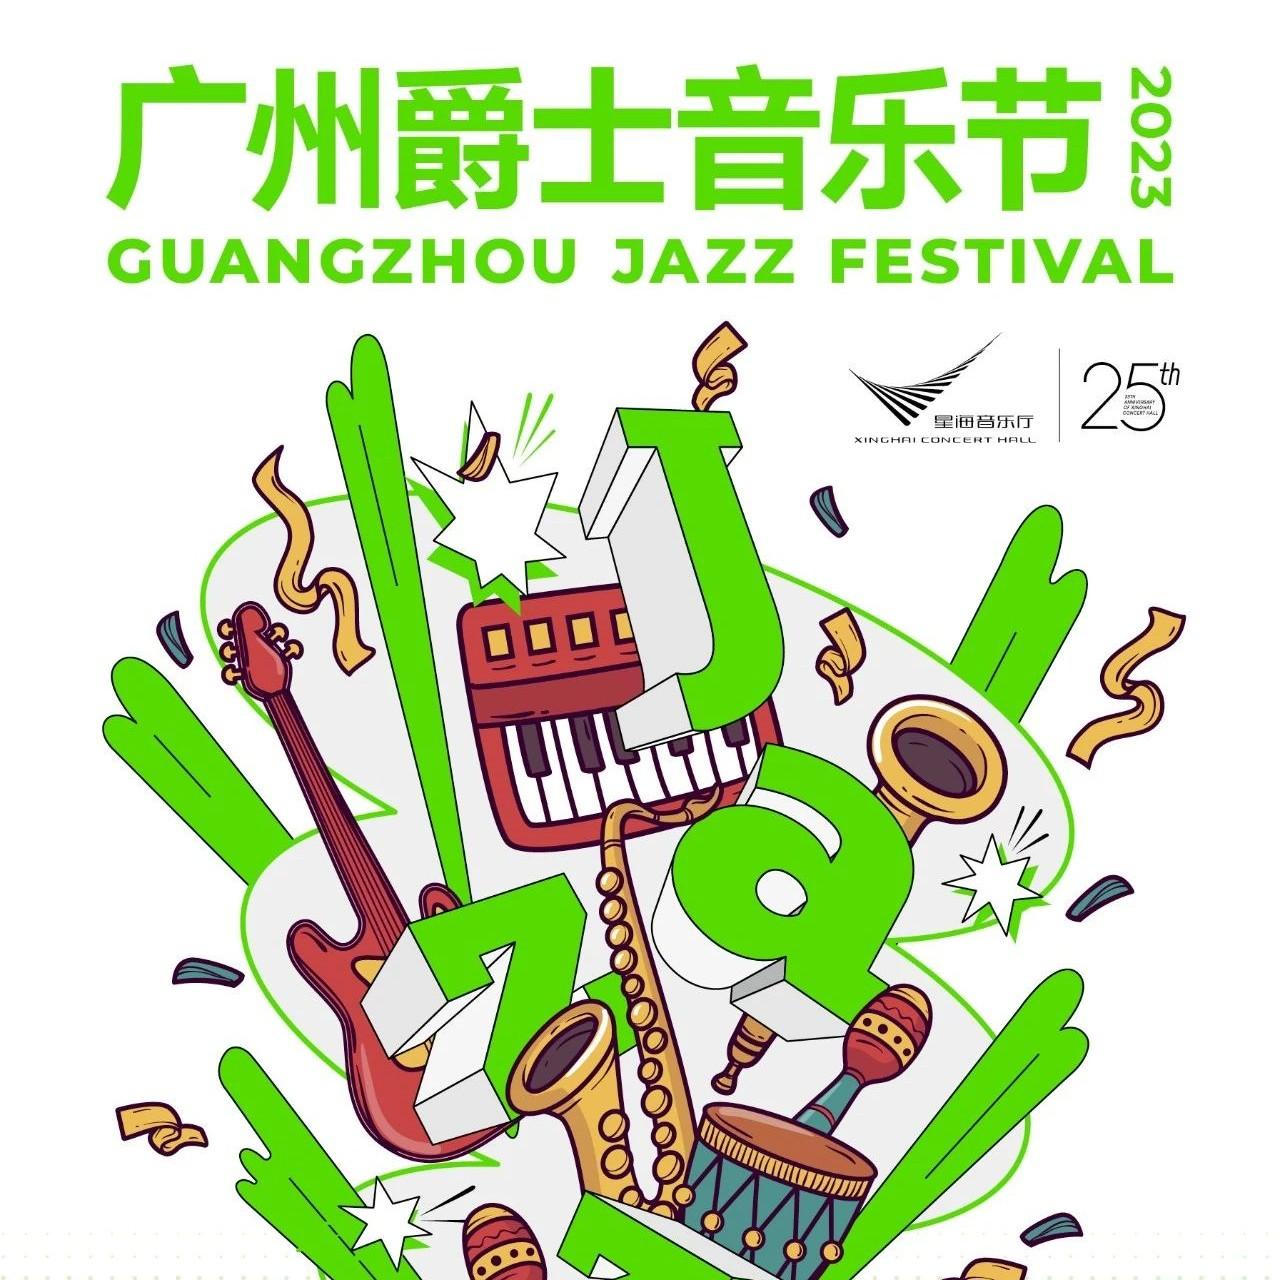 Guangzhou Jazz Festival to kick off with world-class lineup